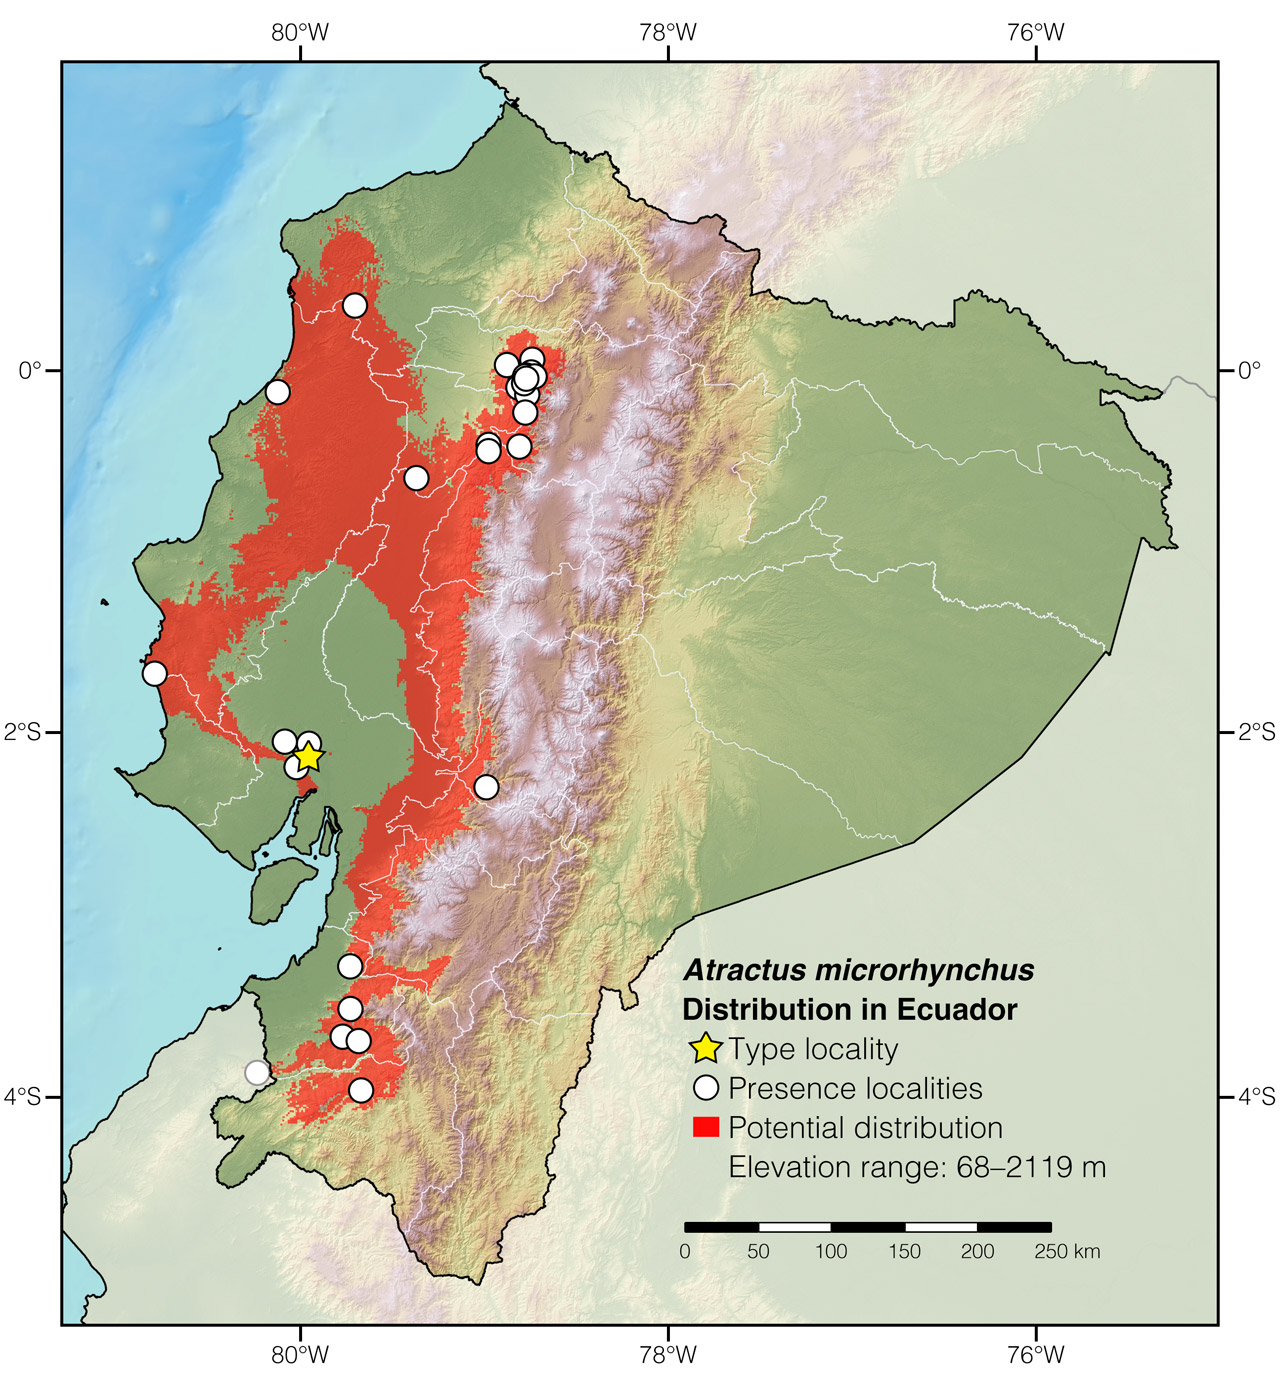 Distribution of Atractus microrhynchus in Ecuador